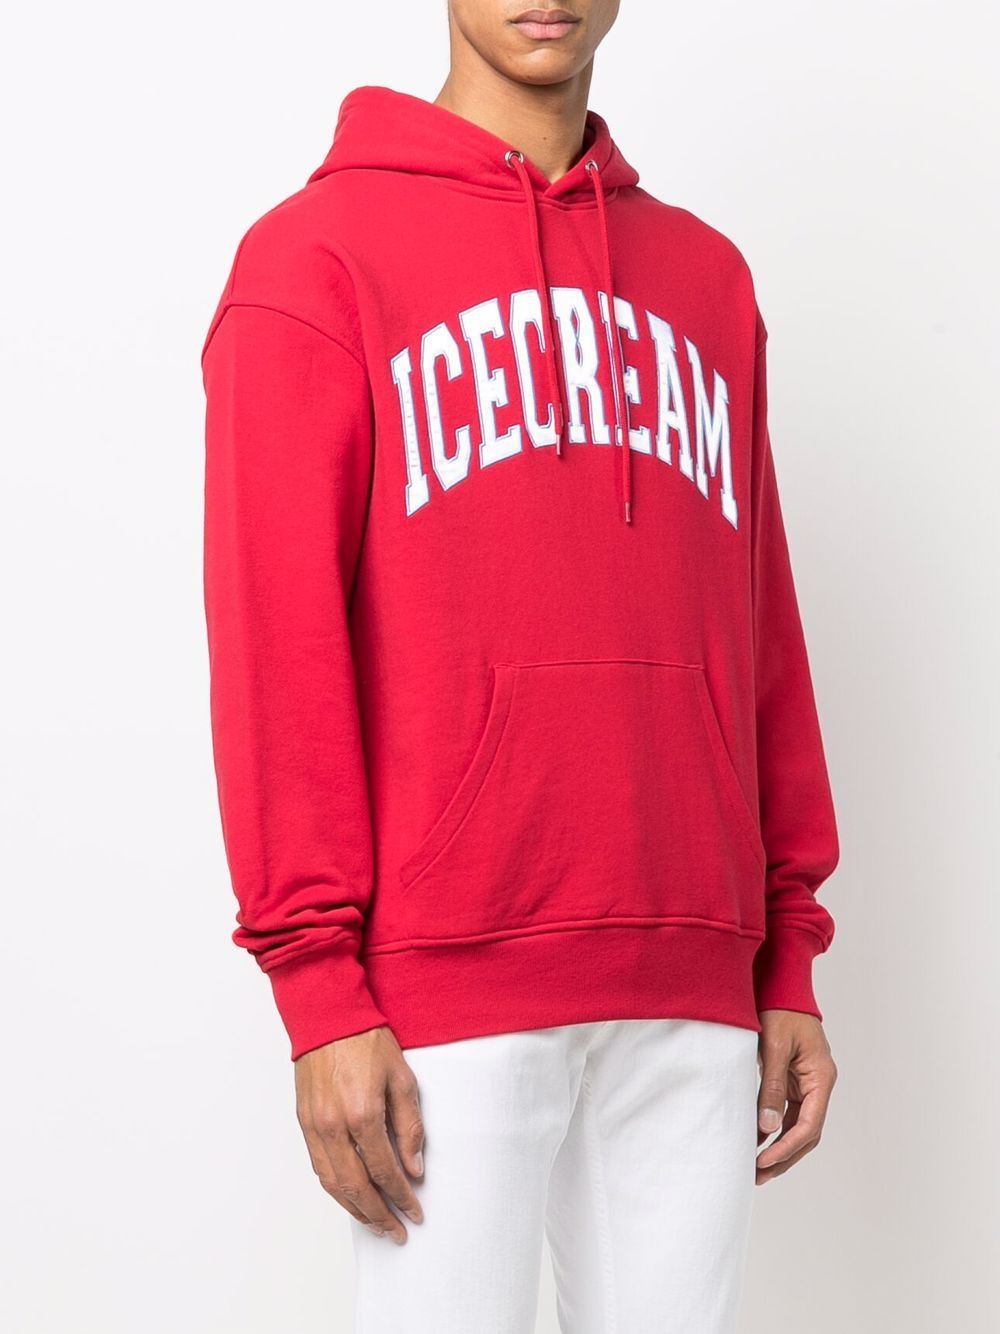 фото Icecream худи с кулиской и вышитым логотипом